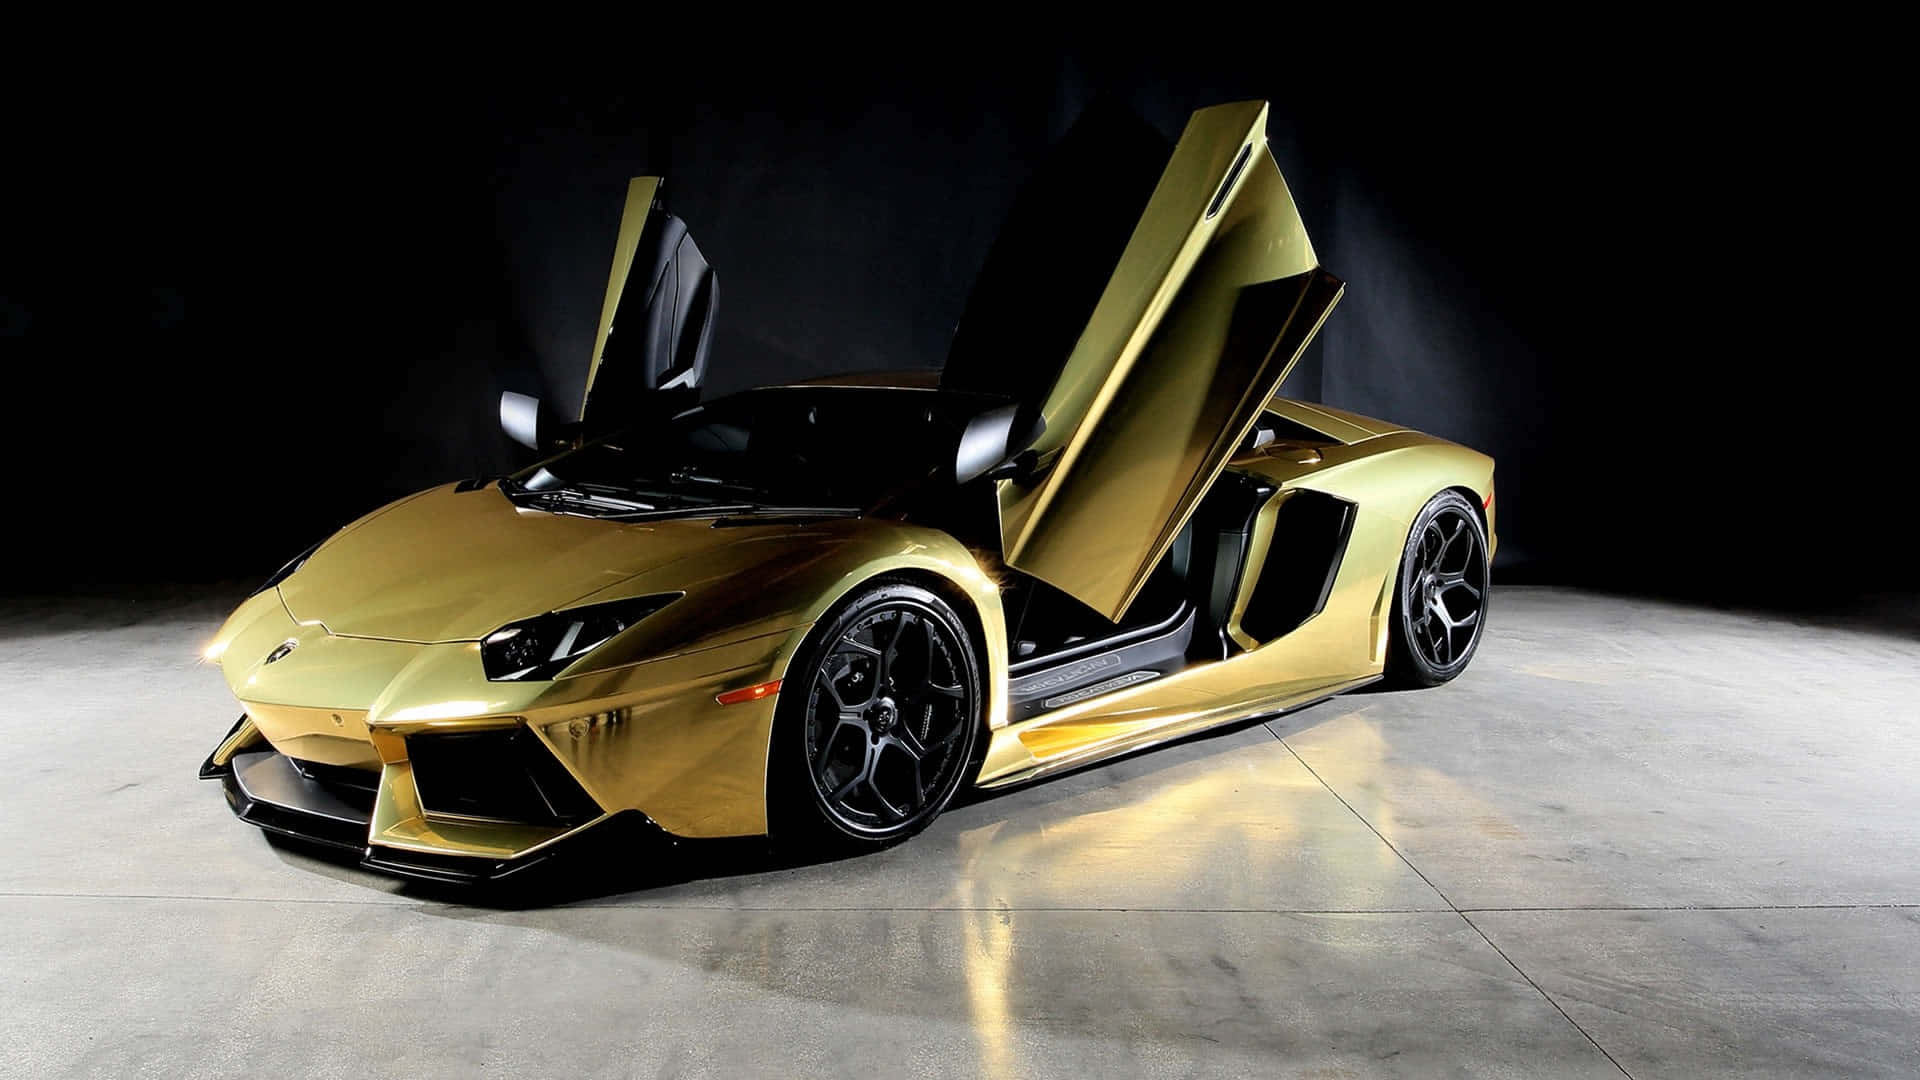 Luxury Personified - The Gold Lamborghini Wallpaper